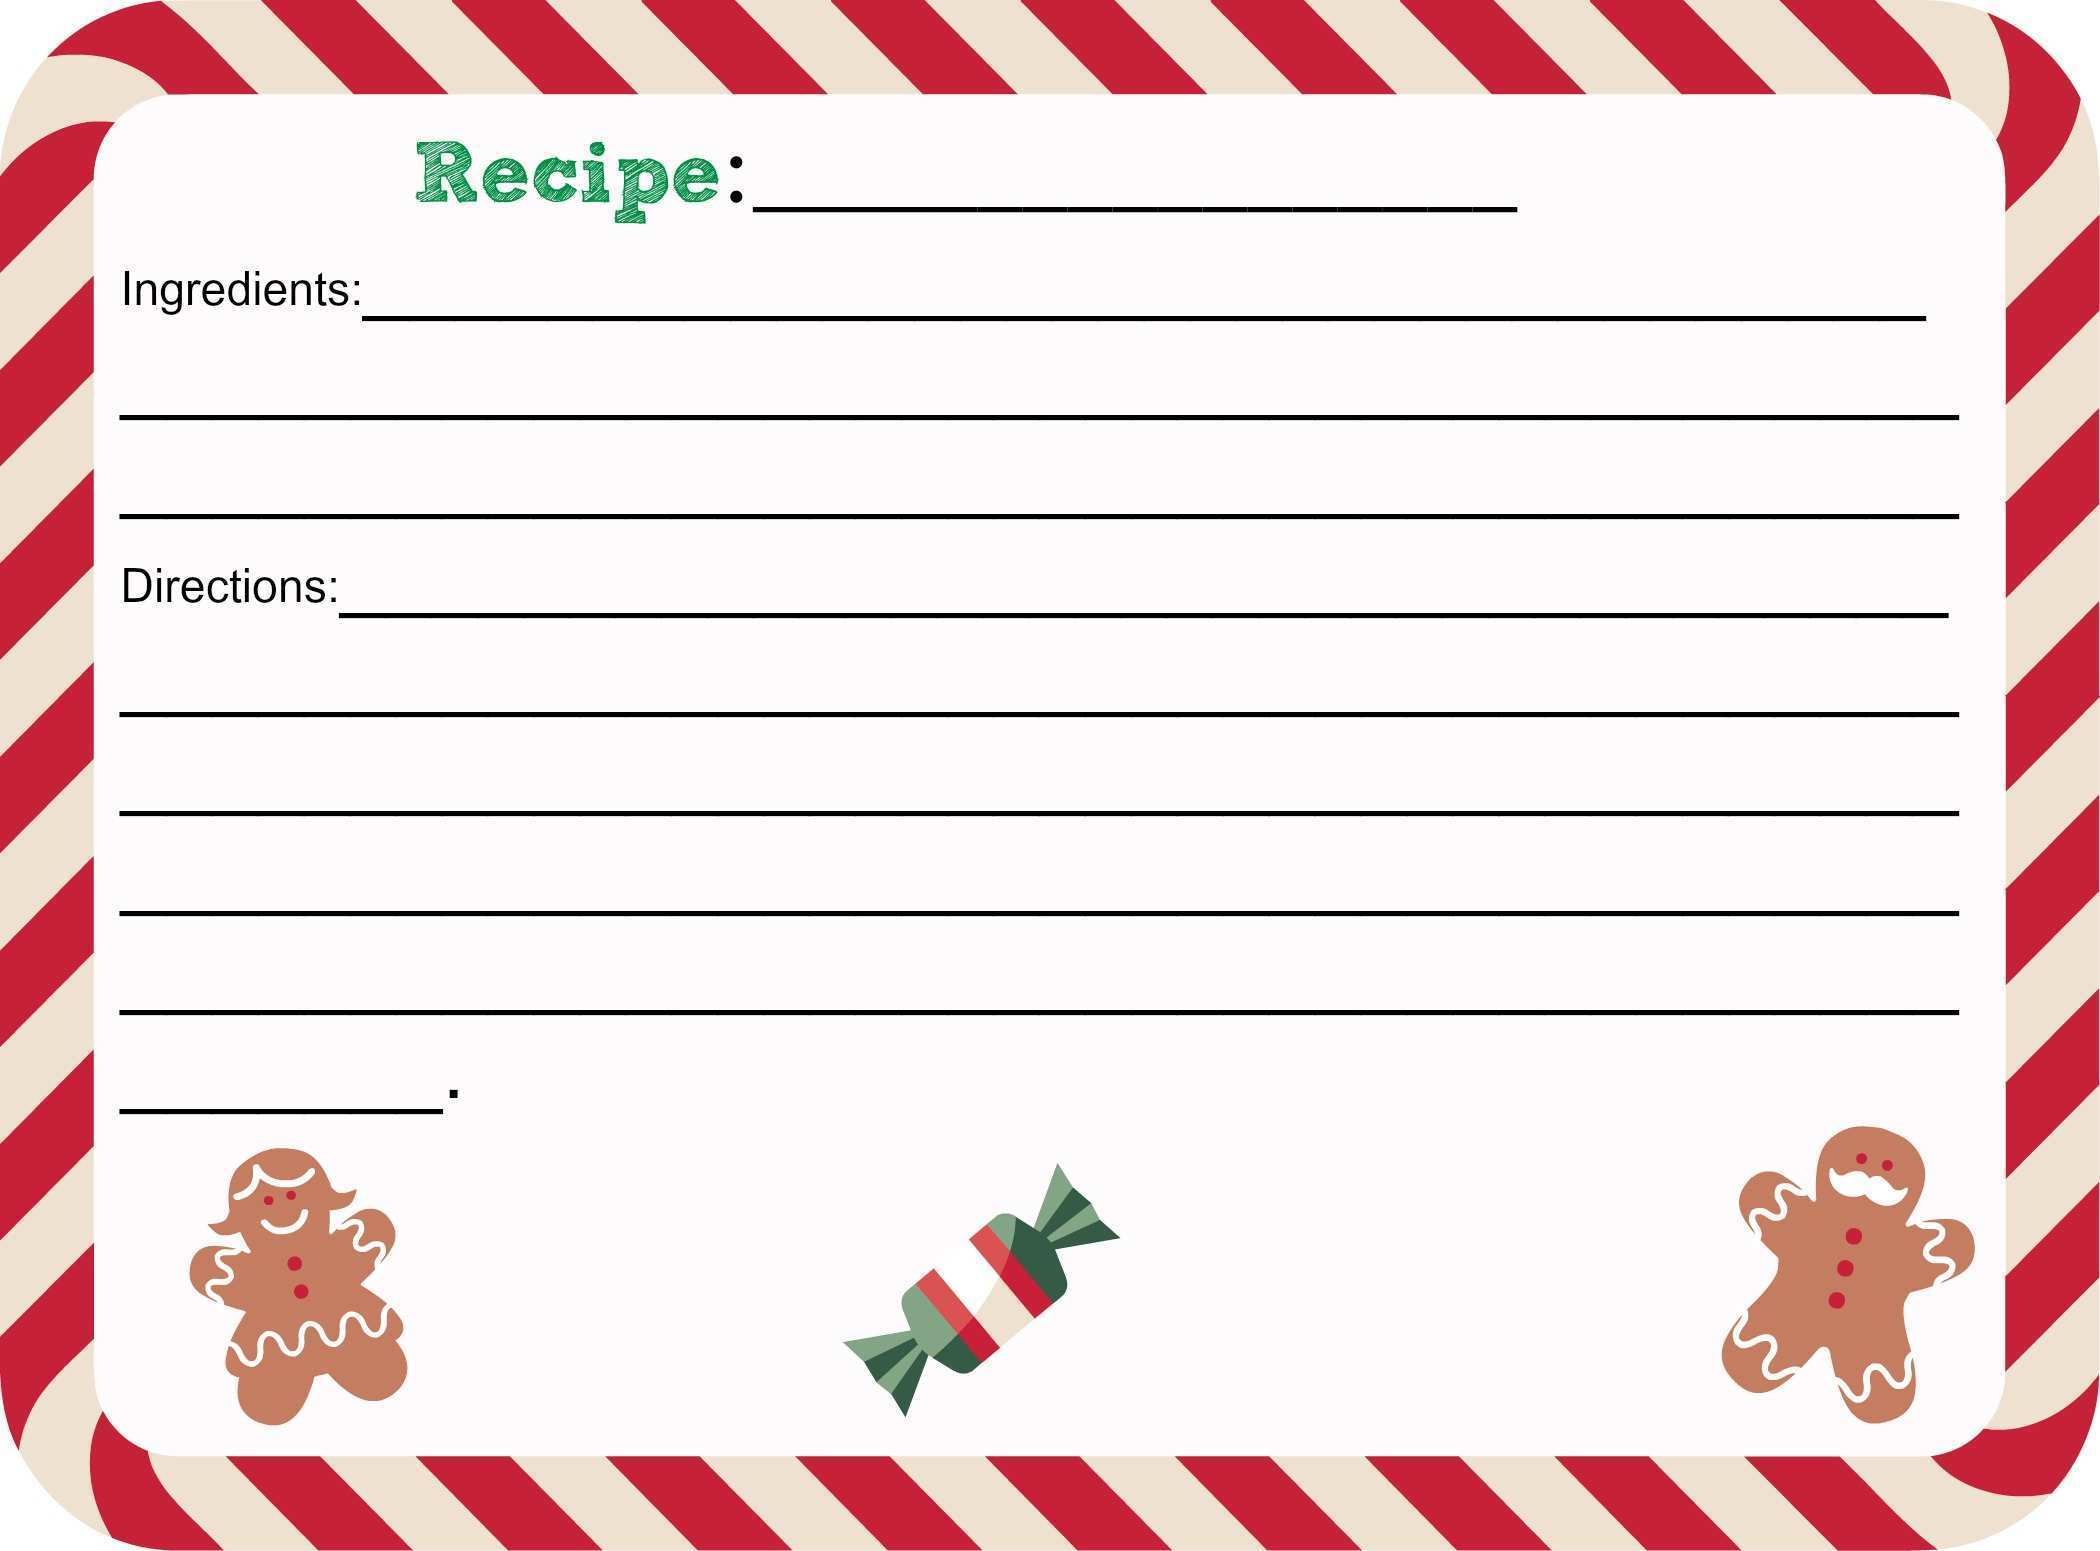 18 Customize Free Christmas Recipe Card Template For Word In Photoshop By Free Christmas Recipe Card Template For Word Cards Design Templates